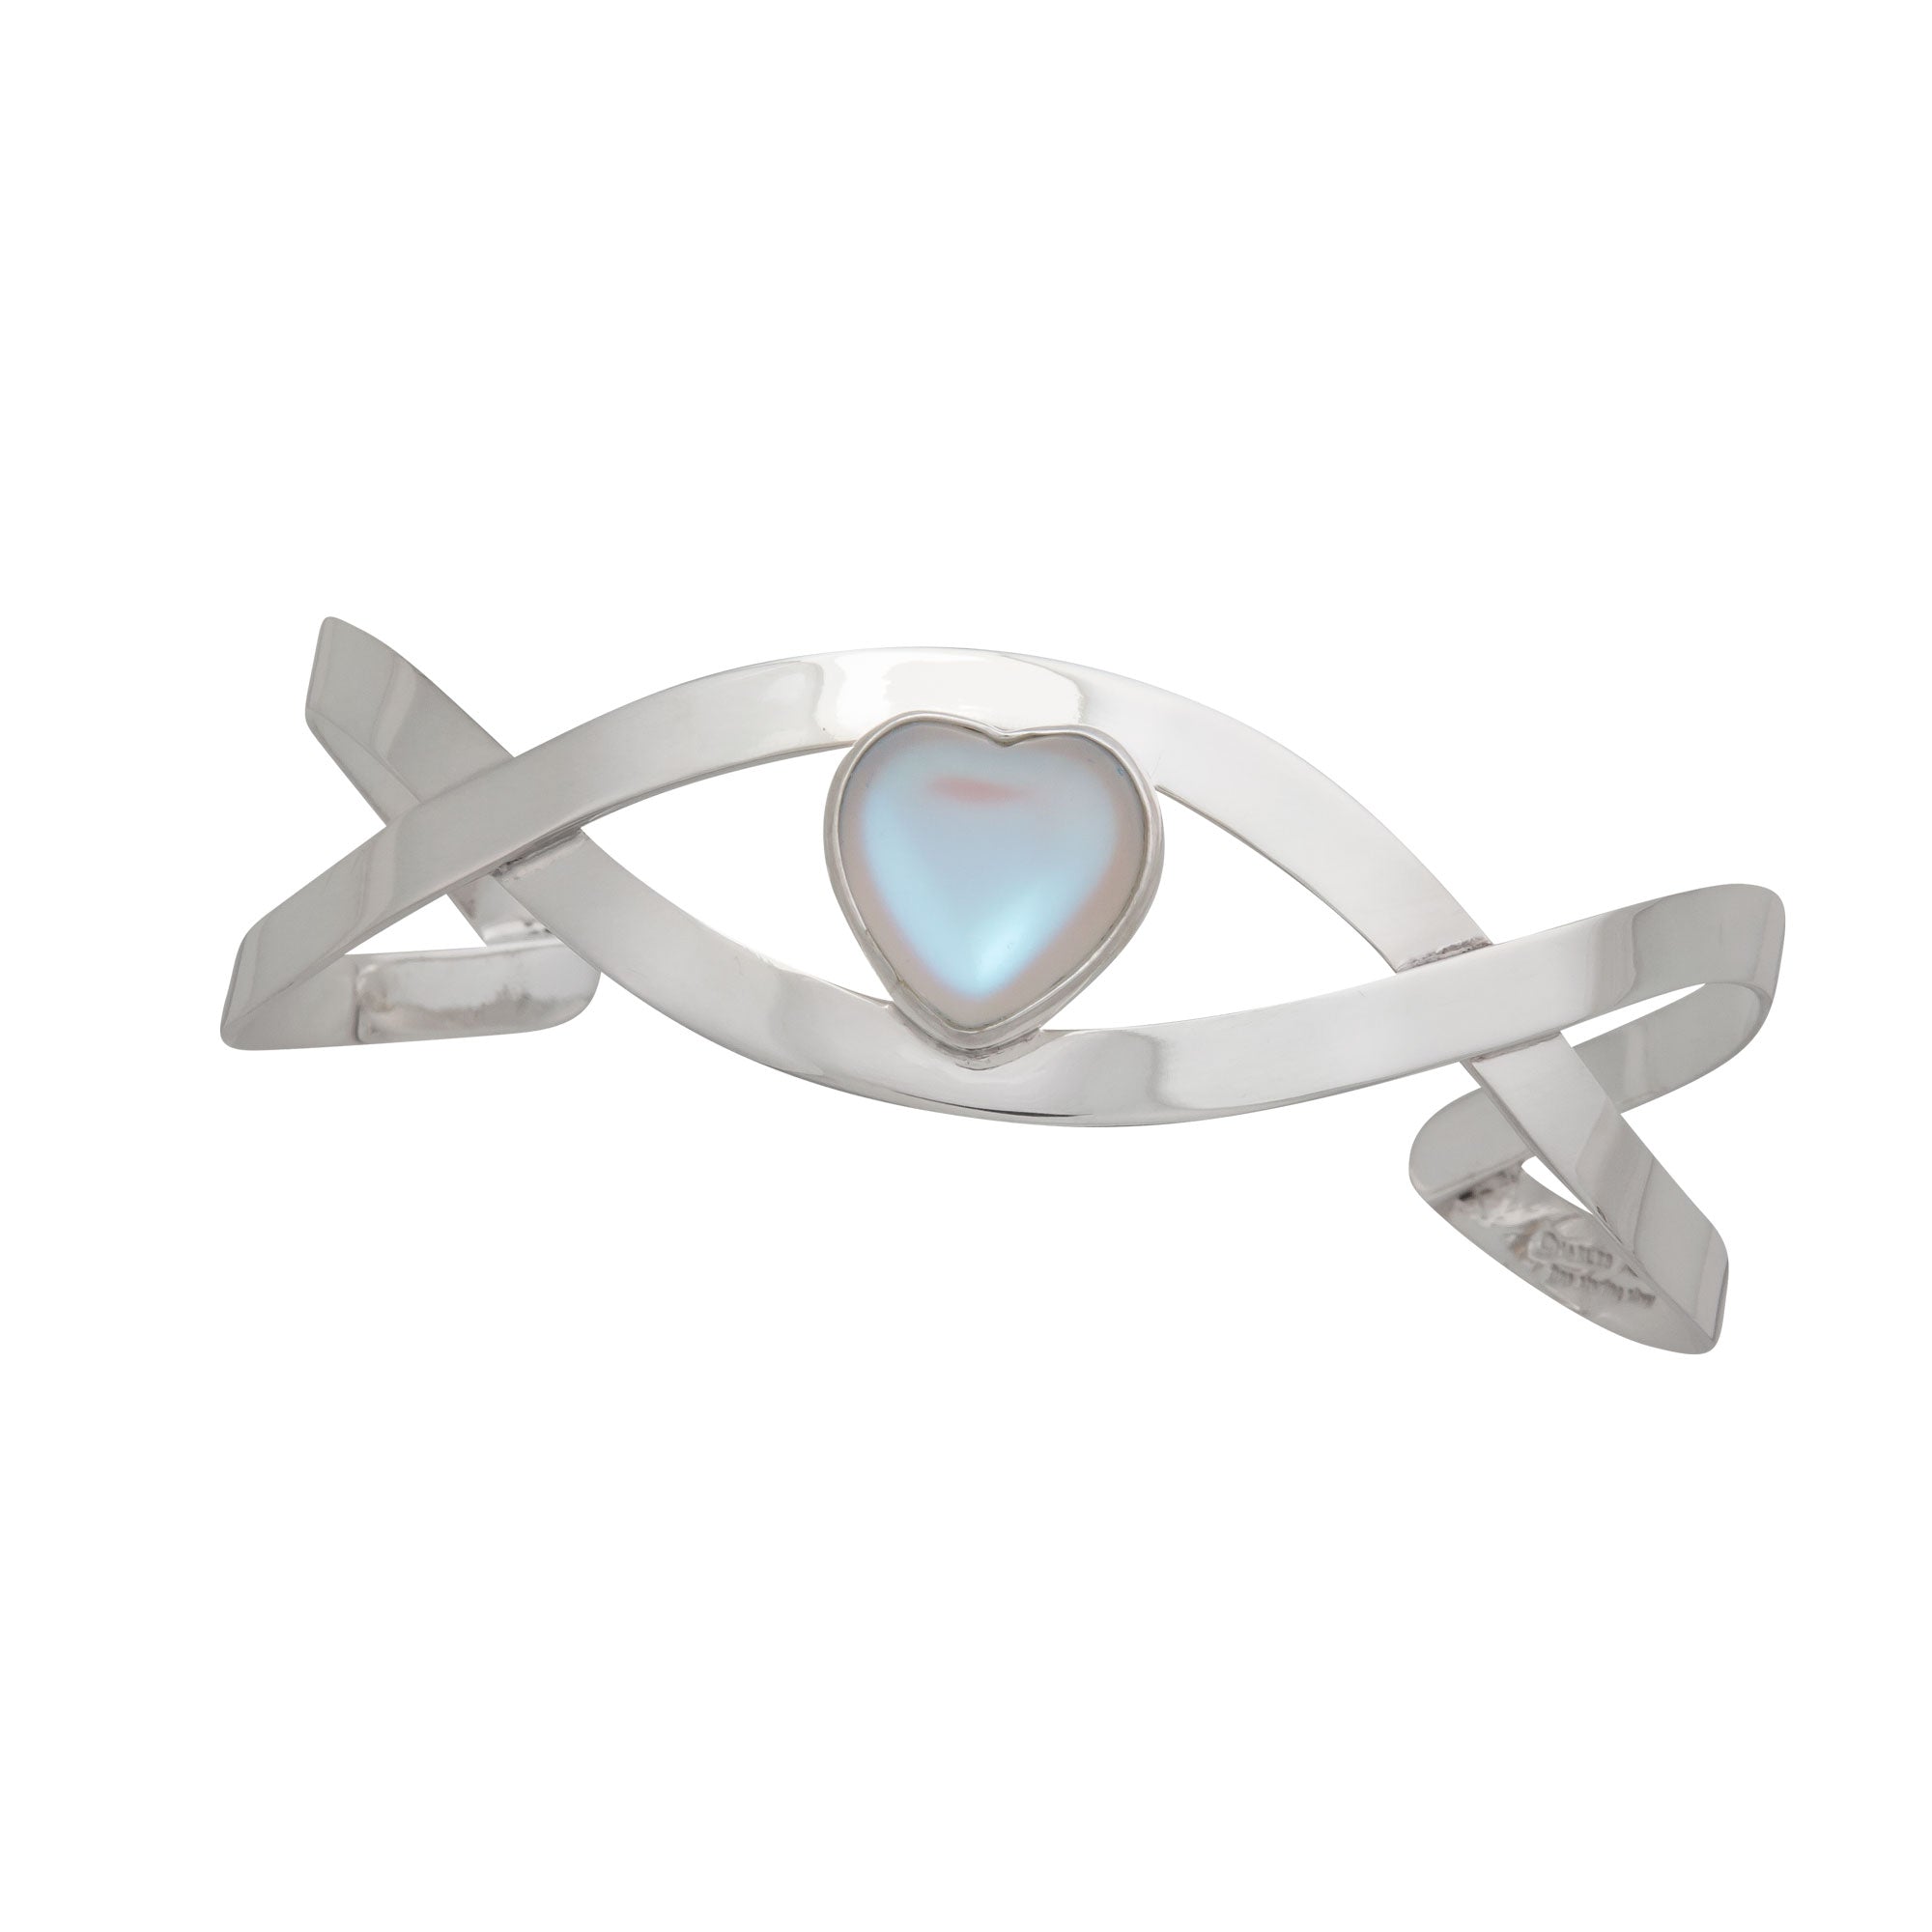 Sterling Silver Luminite Heart Infinity Cuff | Charles Albert Jewelry